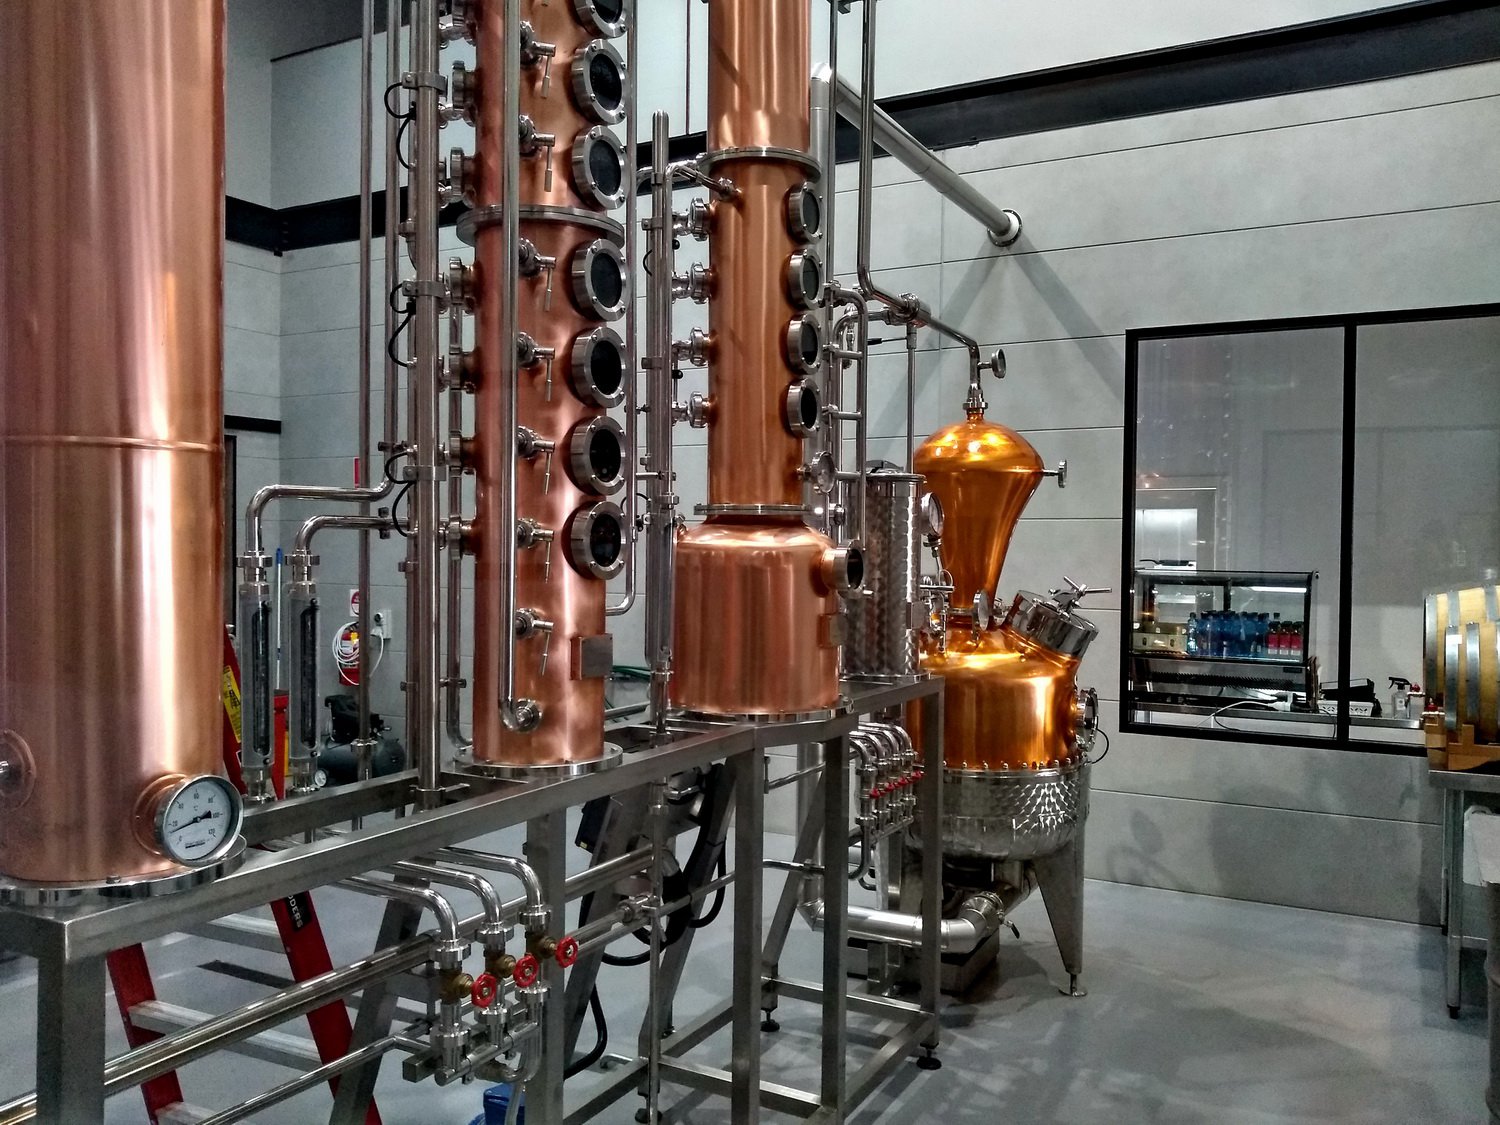 Beautiful copper still at Echuca Distillery. North West Victoria Tour, July 2020.